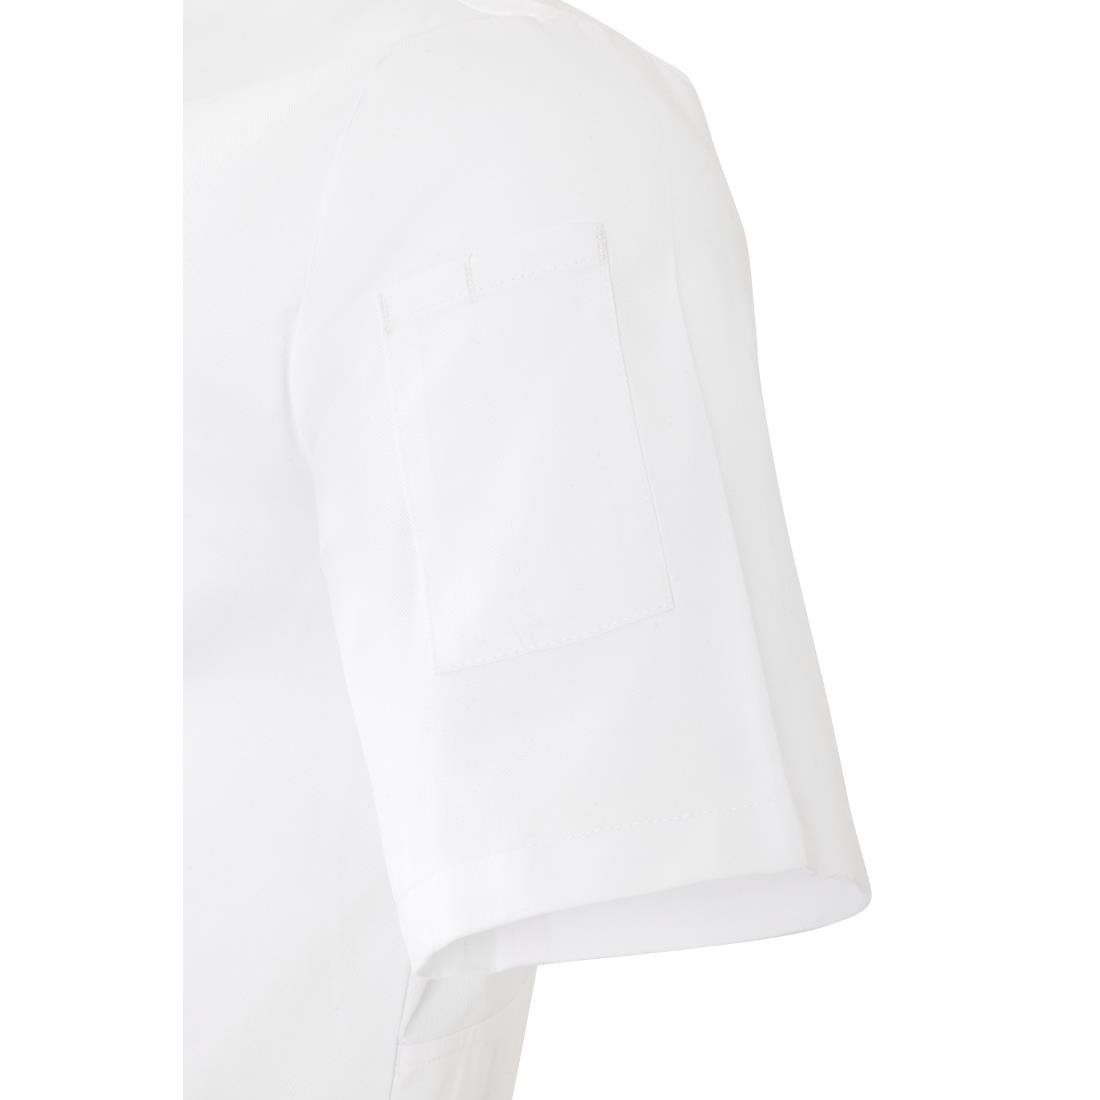 BA116-S Southside Harlem Chefs Jacket White Short Sleeve Mesh Size S